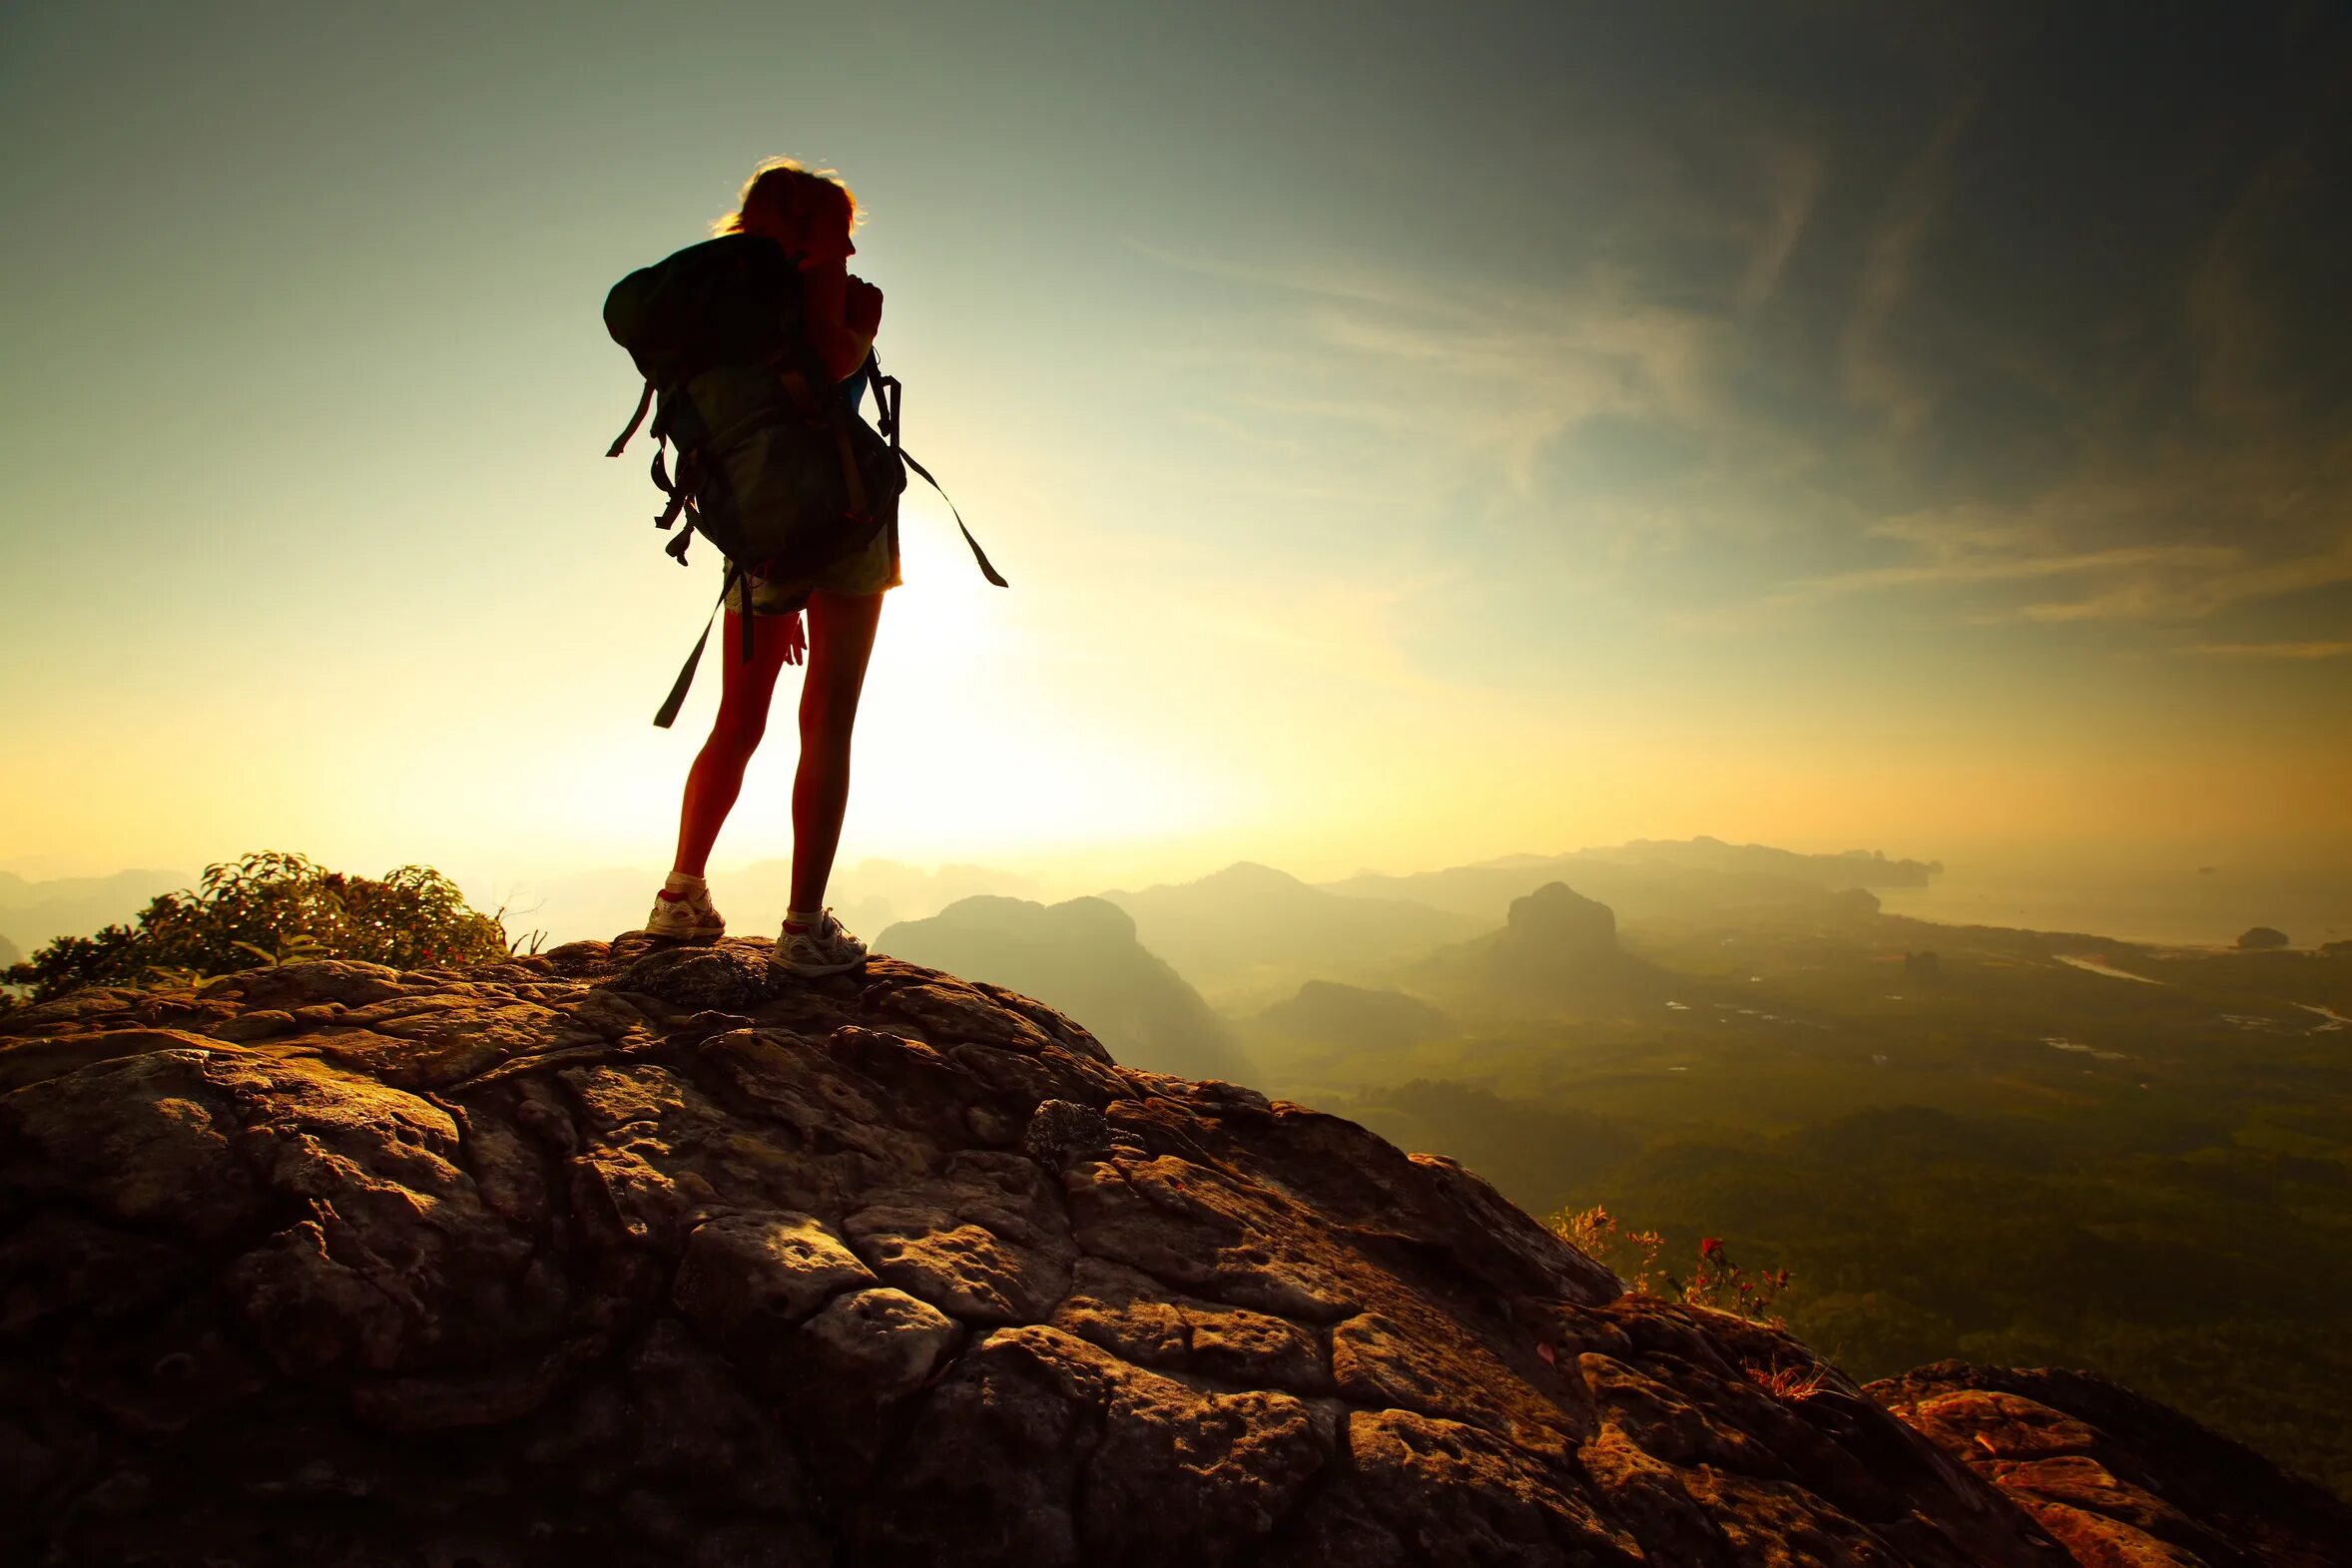 How he travel. Девушка на вершине горы. Человек с рюкзаком. Человек на вершине горы. Фотосессия в горах.